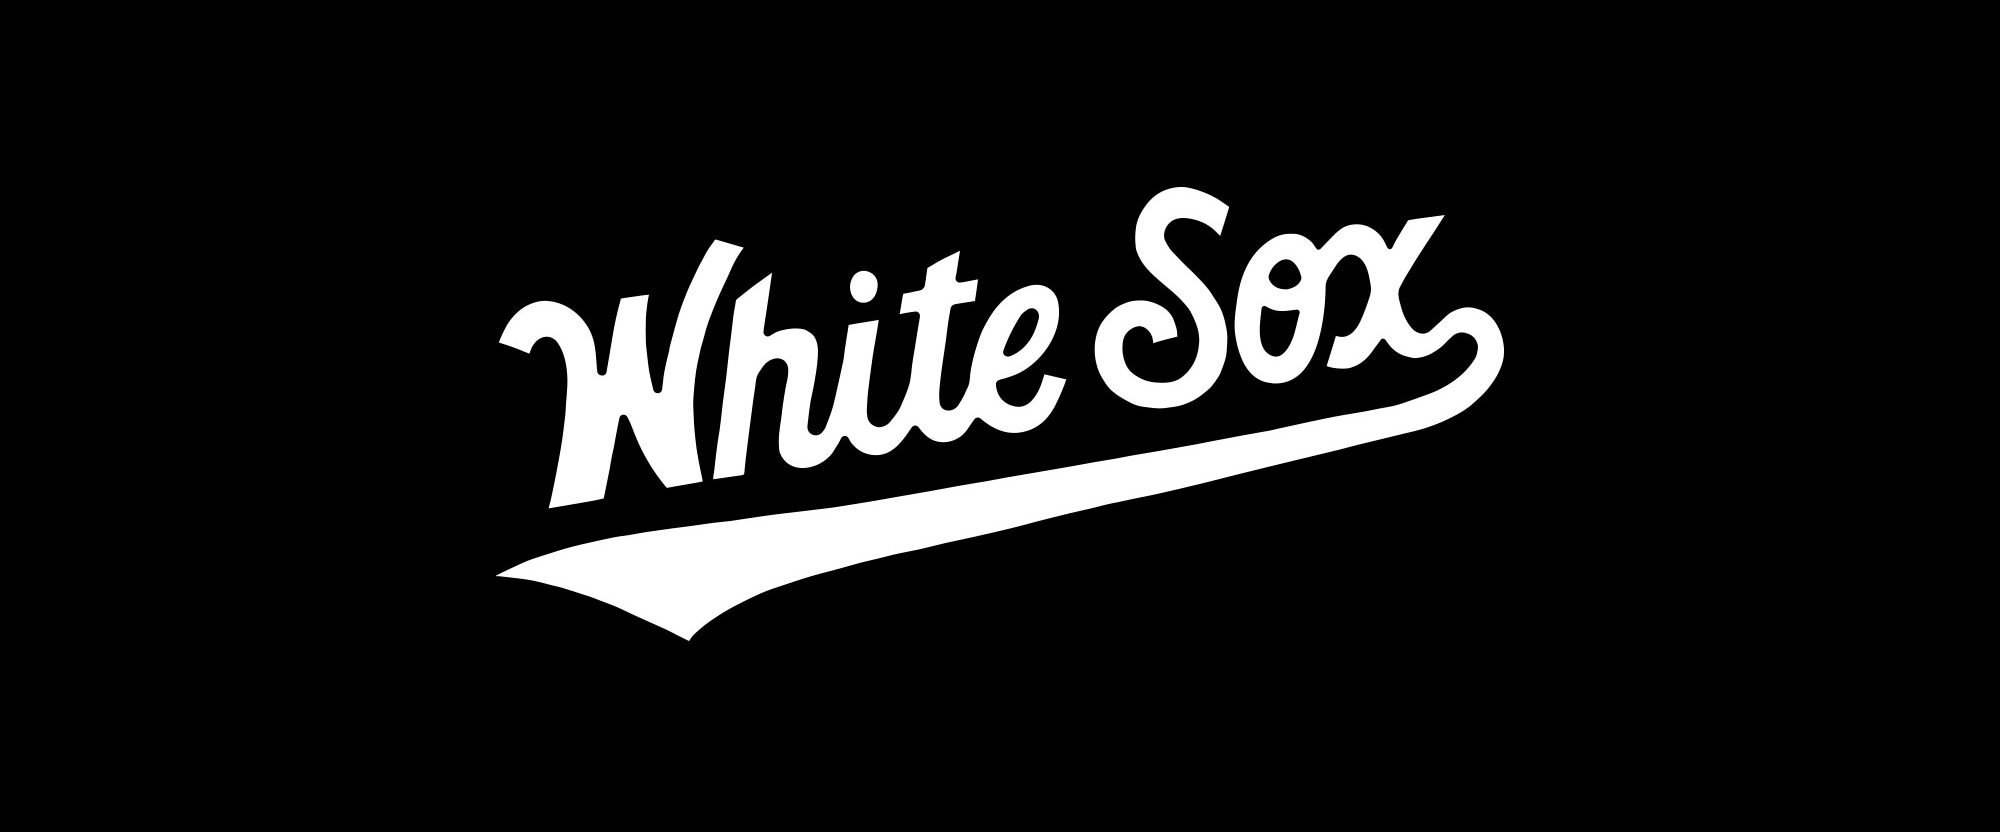 Chicago White Sox Alternate Logo